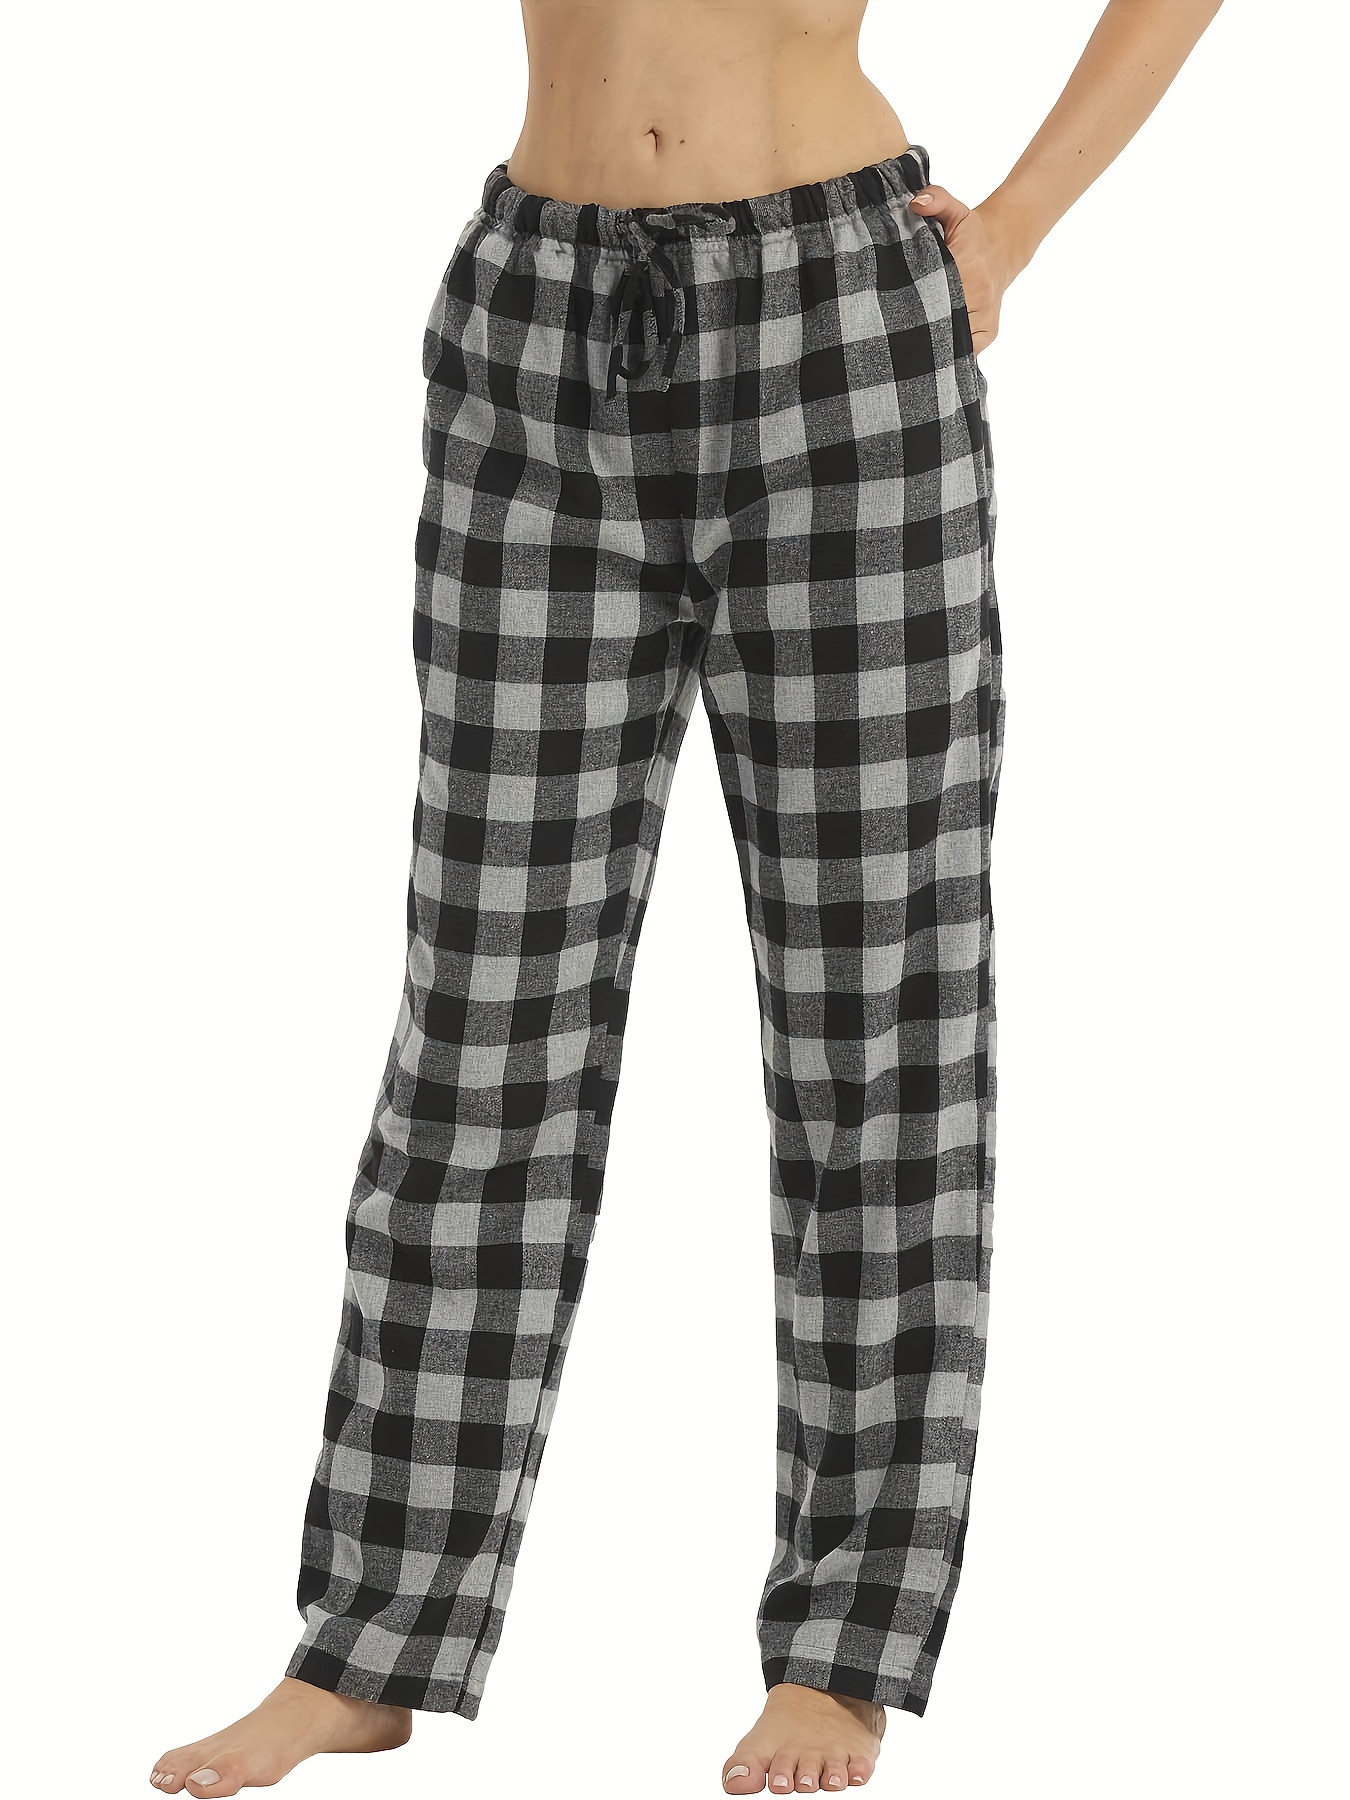 Women Pajama Pants Lounge Pants with Pockets Sleepwear